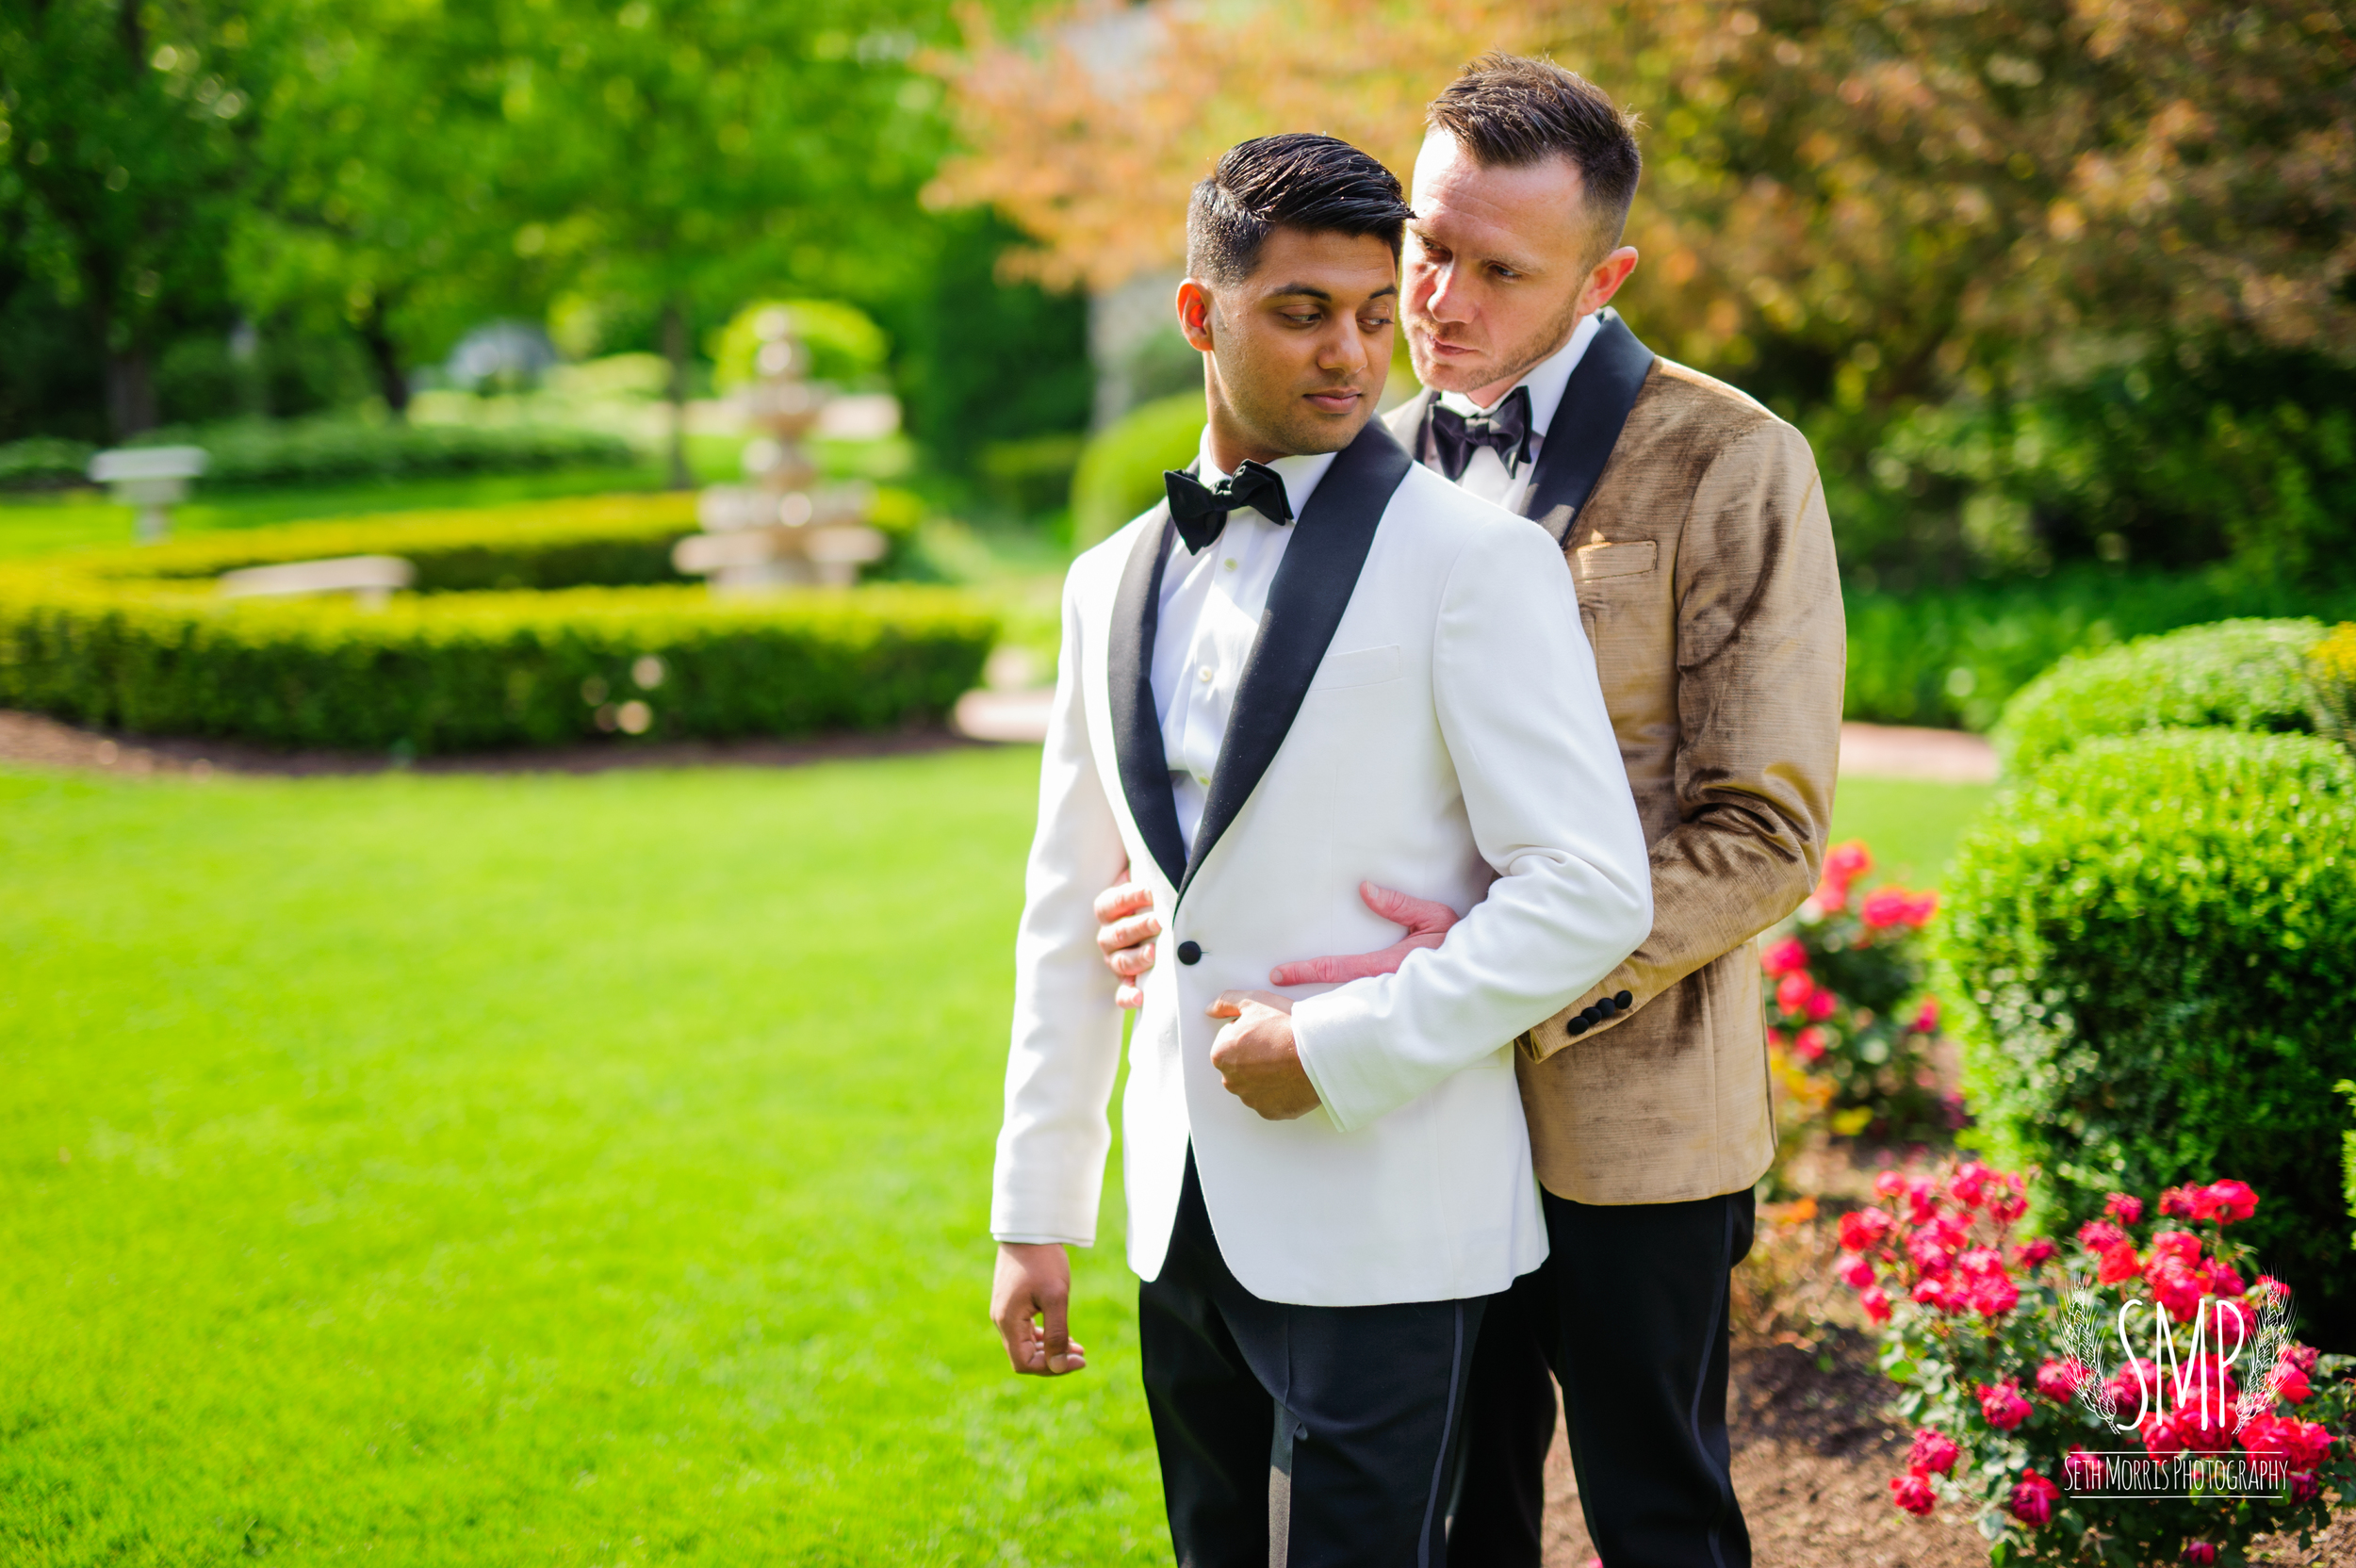 same-sex-wedding-photographer-chicago-illinois-45.jpg